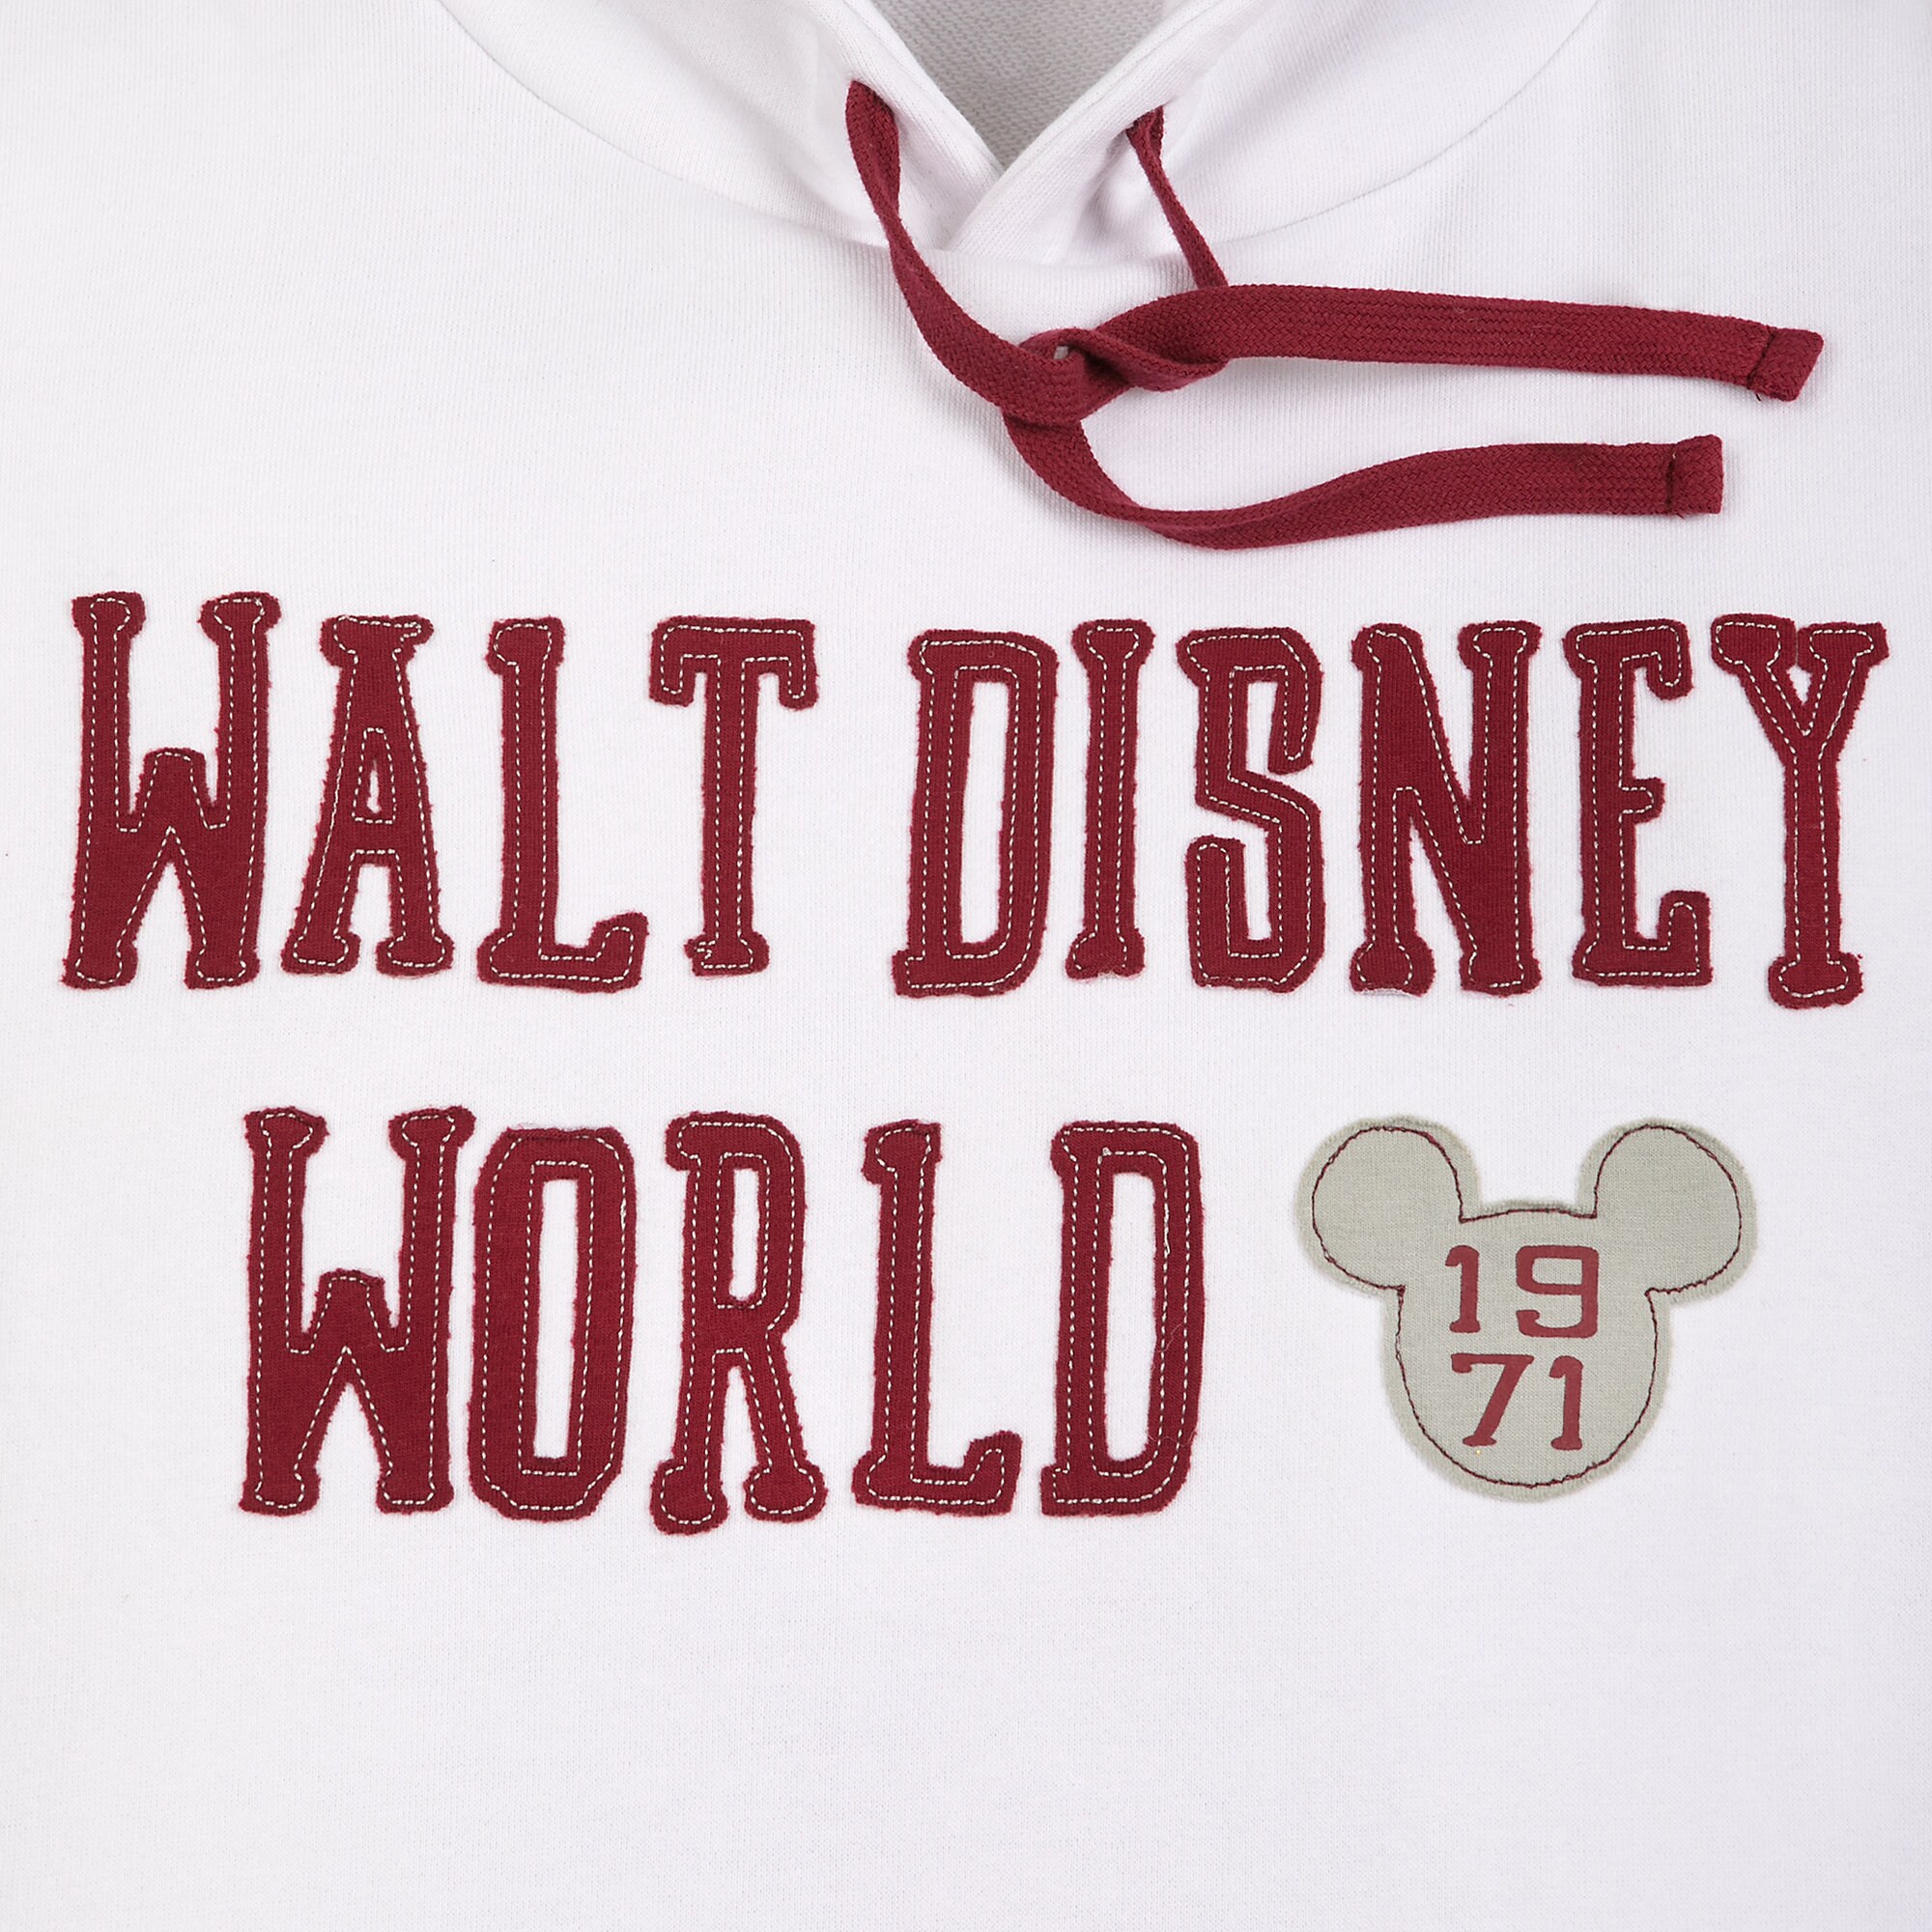 Walt Disney World Pullover Hoodie for Men